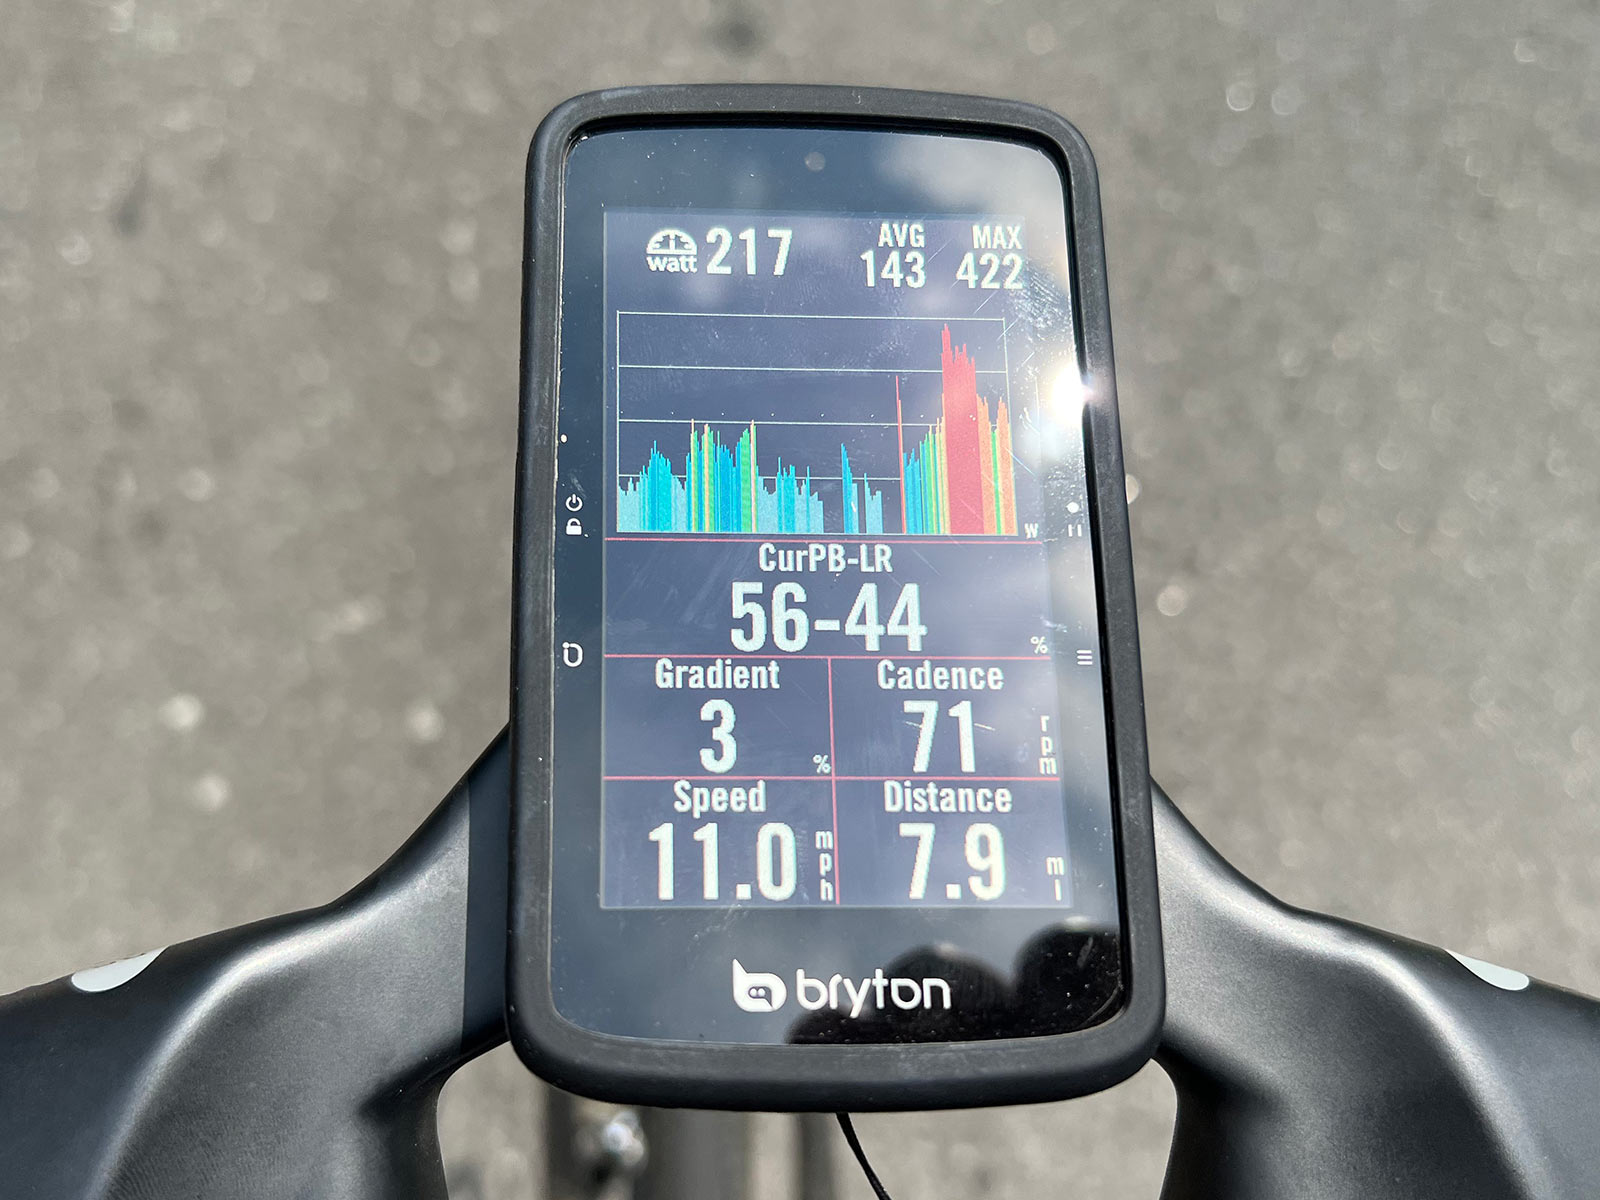 Bryton Rider S800 review - wonderful bike computer, woeful app